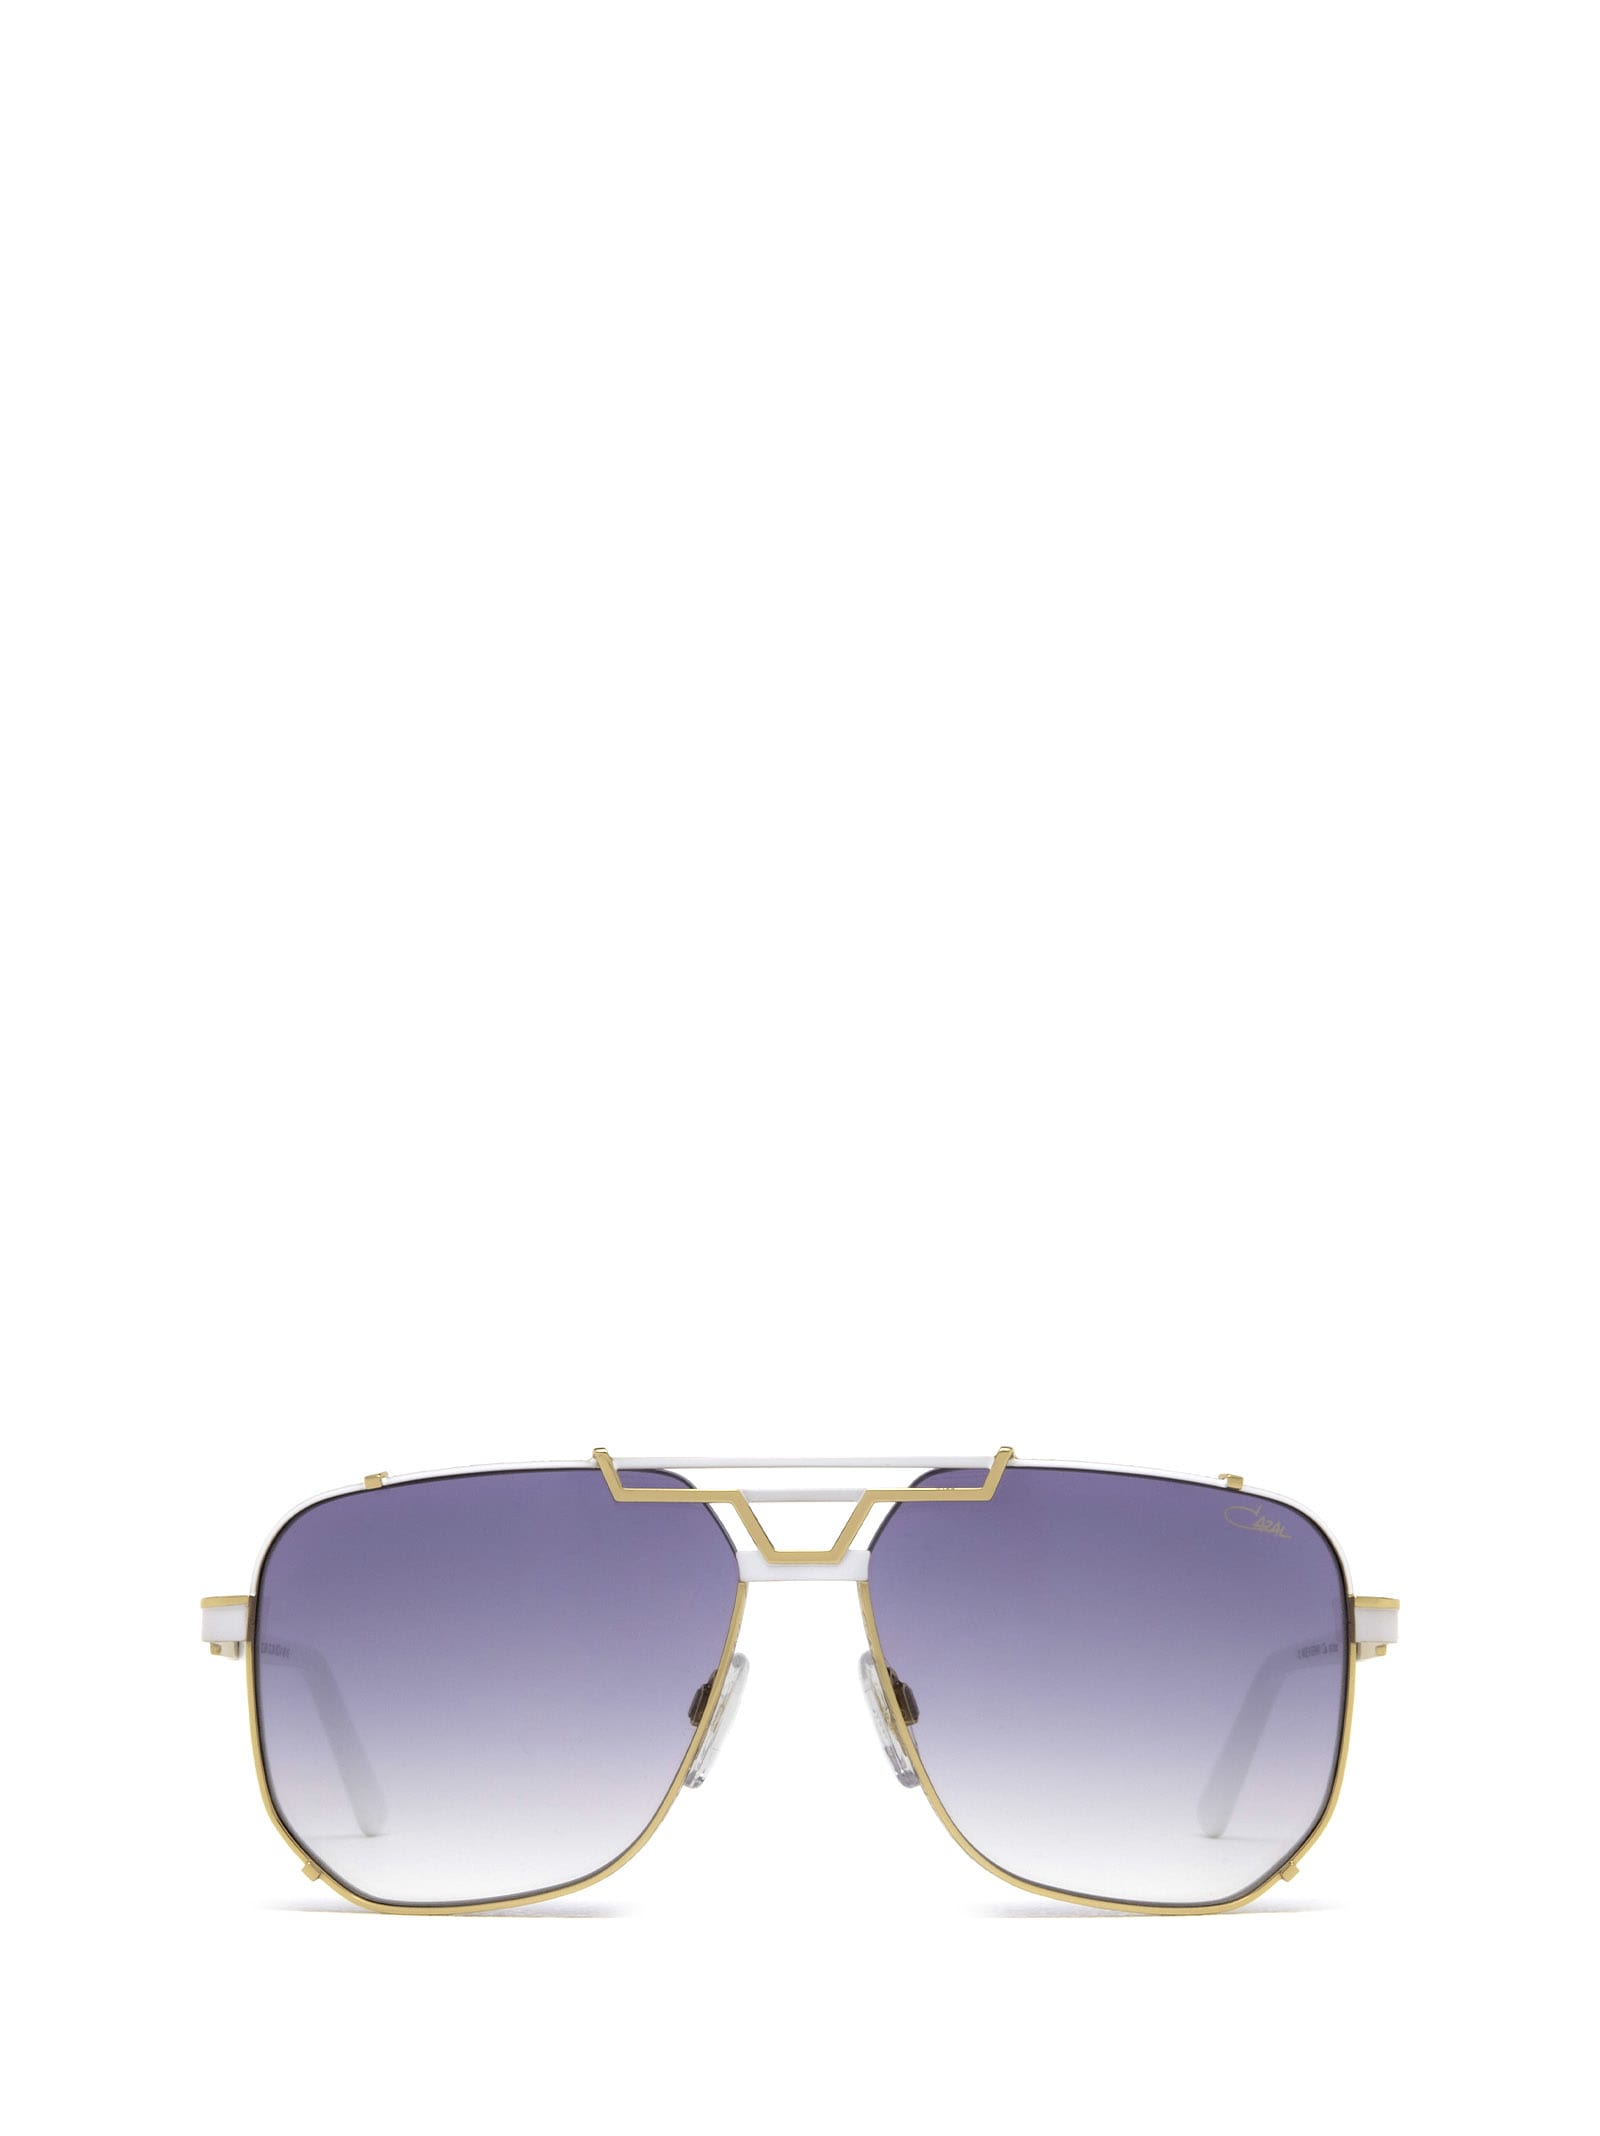 Cazal 9090 Gold - Cream Sunglasses